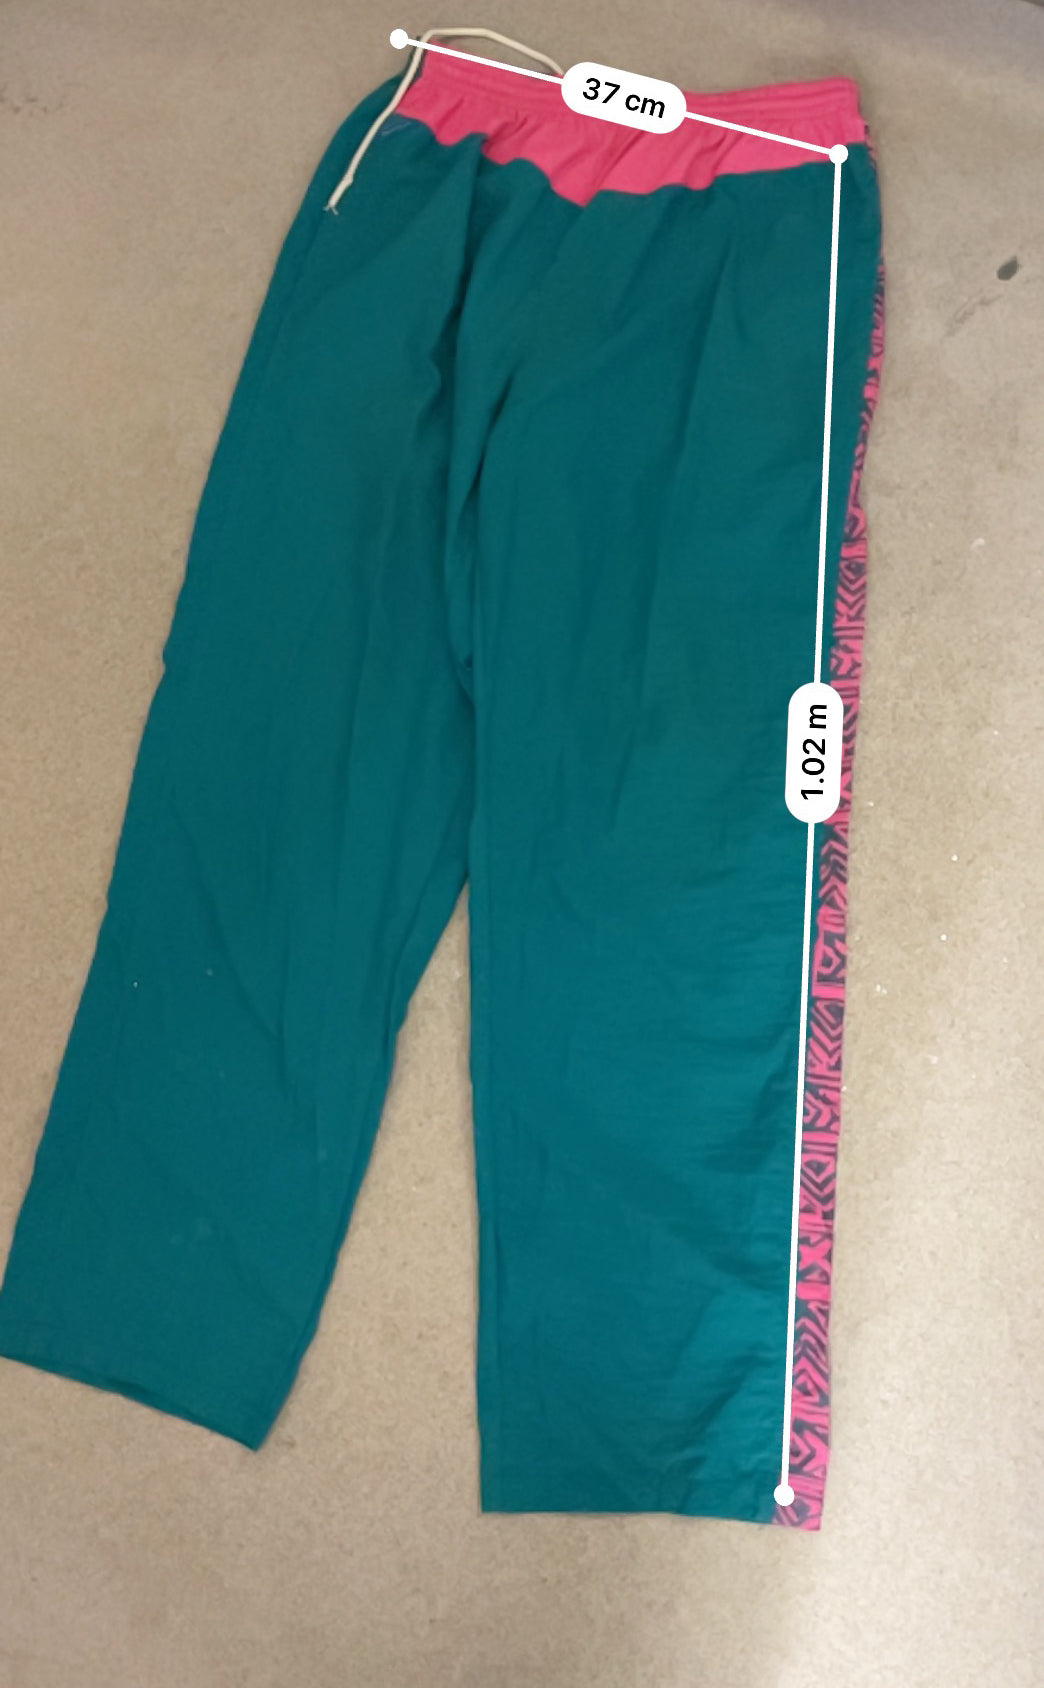 ZENGVEE Men's Sweatpants w. Zipper Pockets Open Bottom Athletic Pants f.  Jogging | eBay